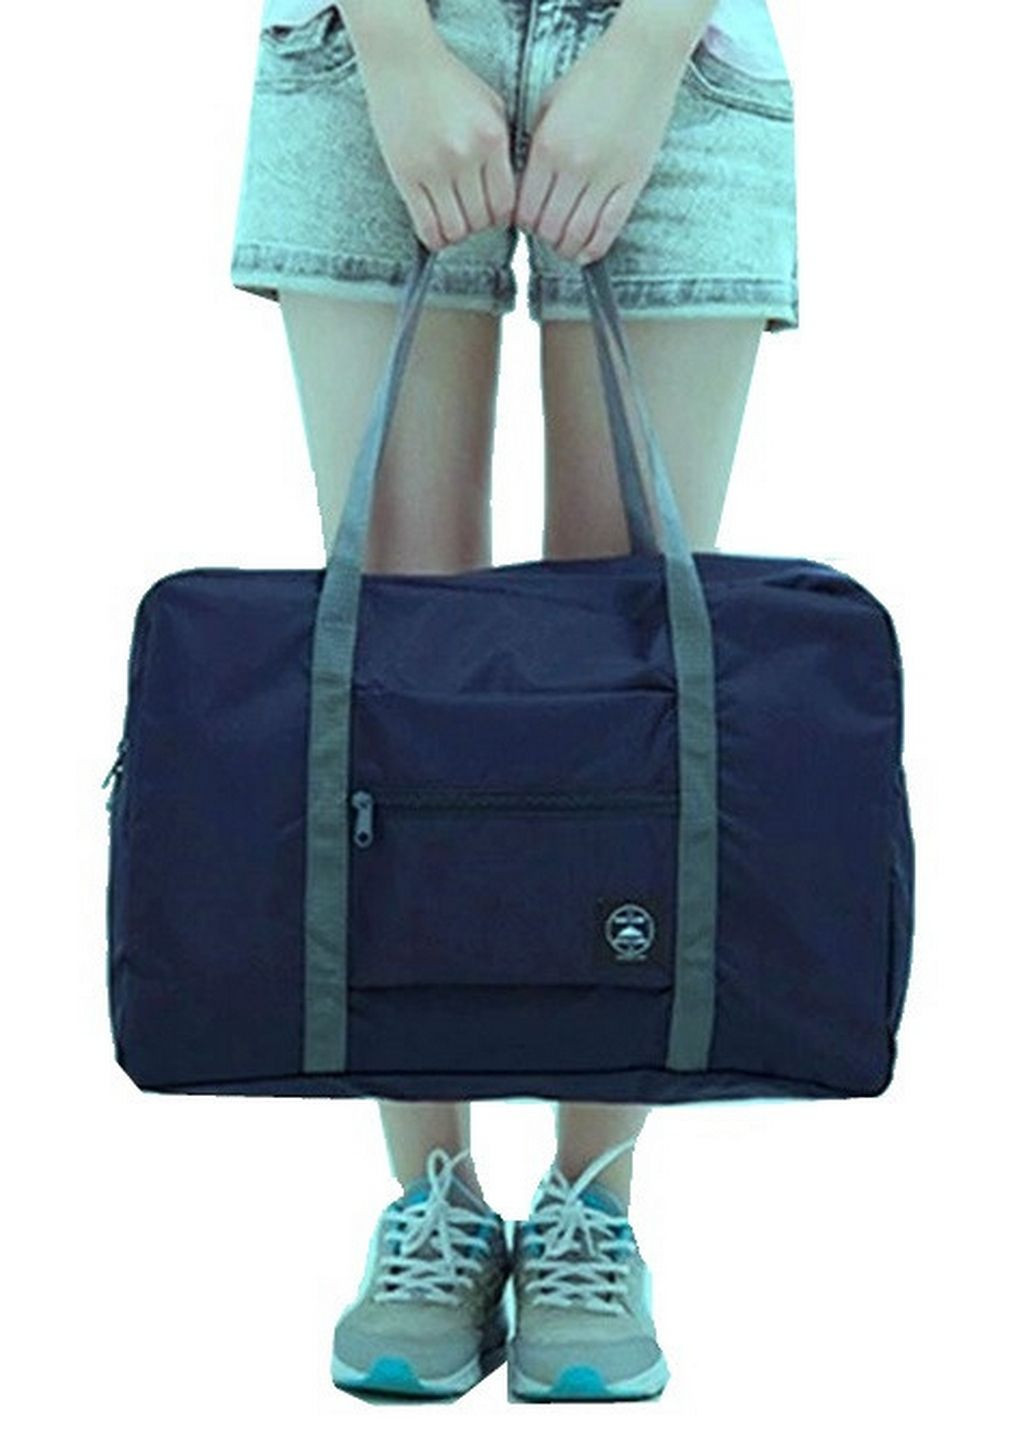 Складна дорожня спортивна сумка 25L DKM Bag No Brand (279319731)